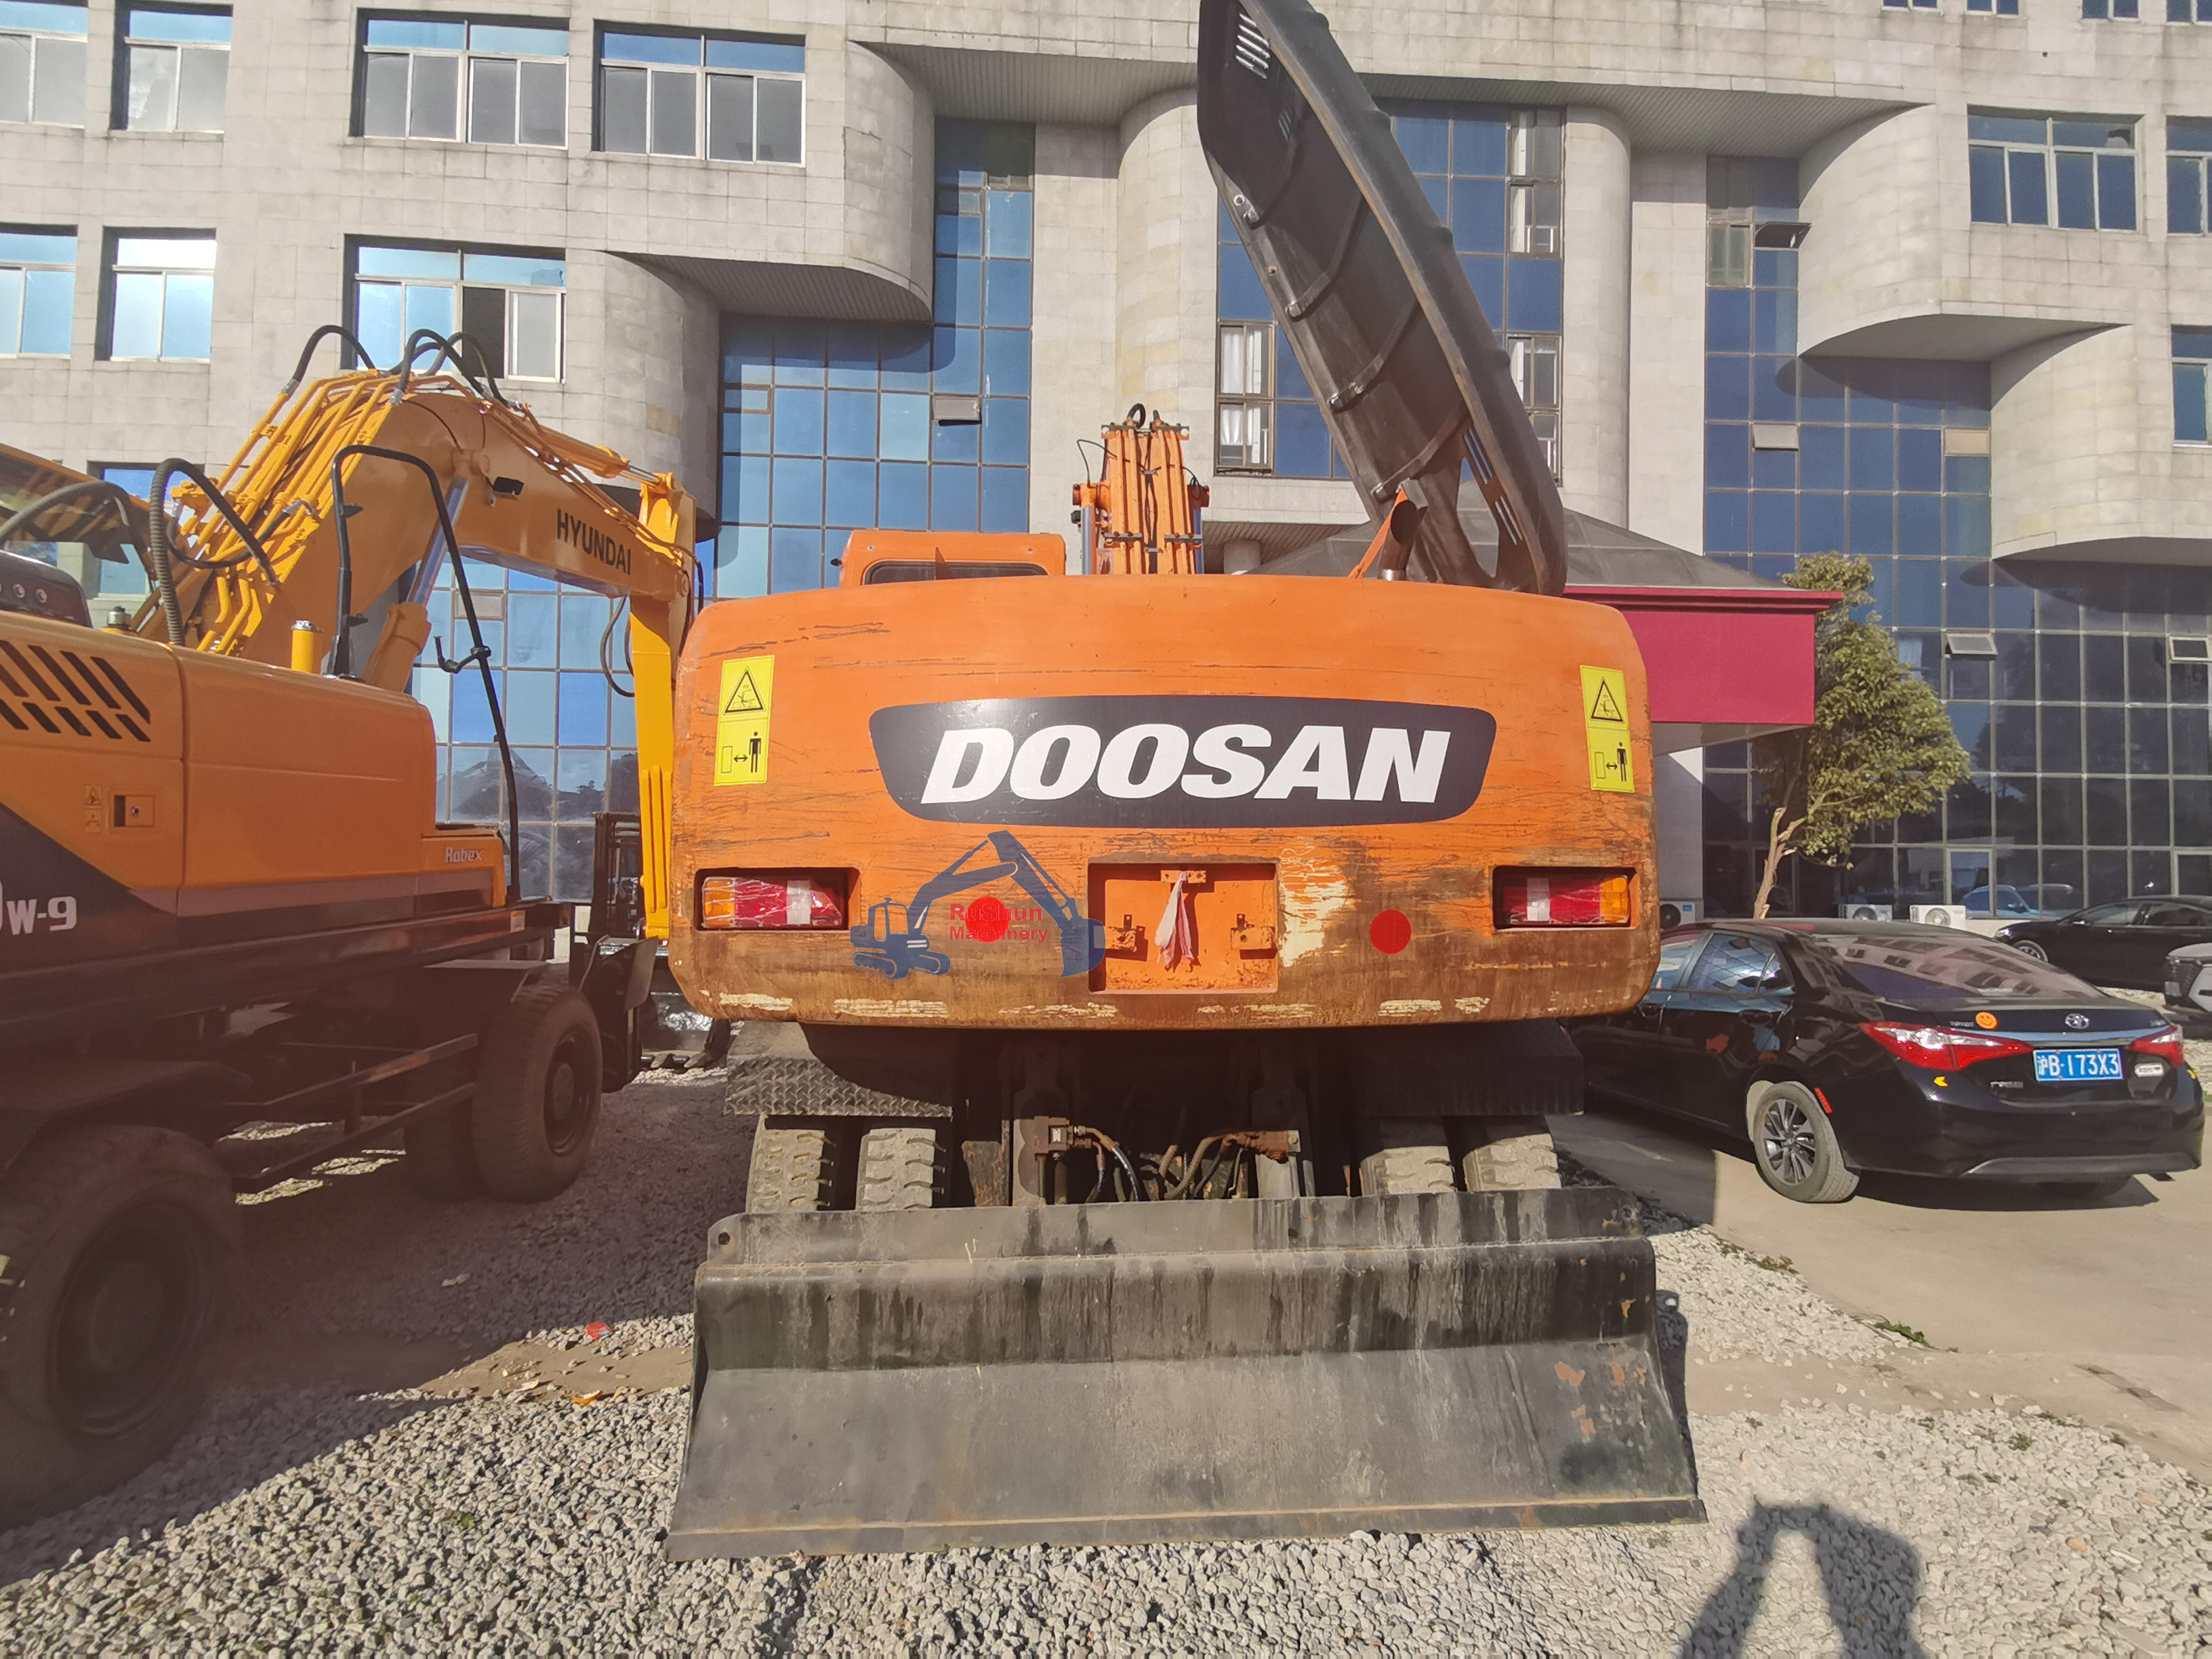 Used DOOSAN DH210W-7 Excavator